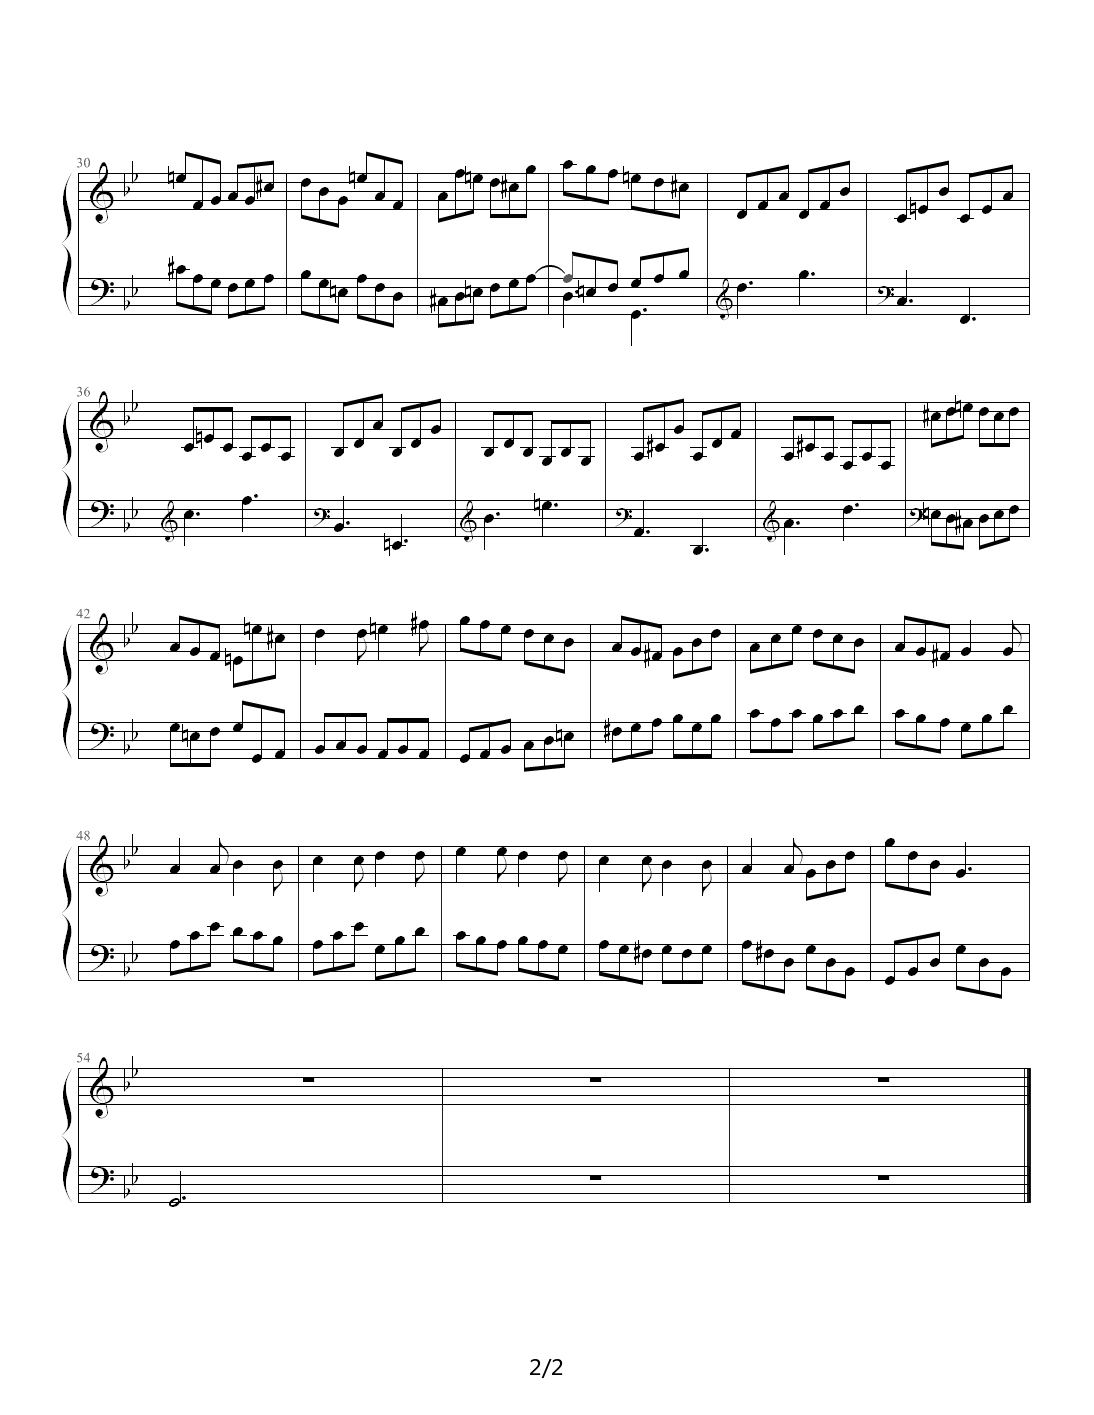 Piano Suite in G minor钢琴谱|Piano Suite in G minor最新钢琴谱|Piano Suite in G minor钢琴谱下载